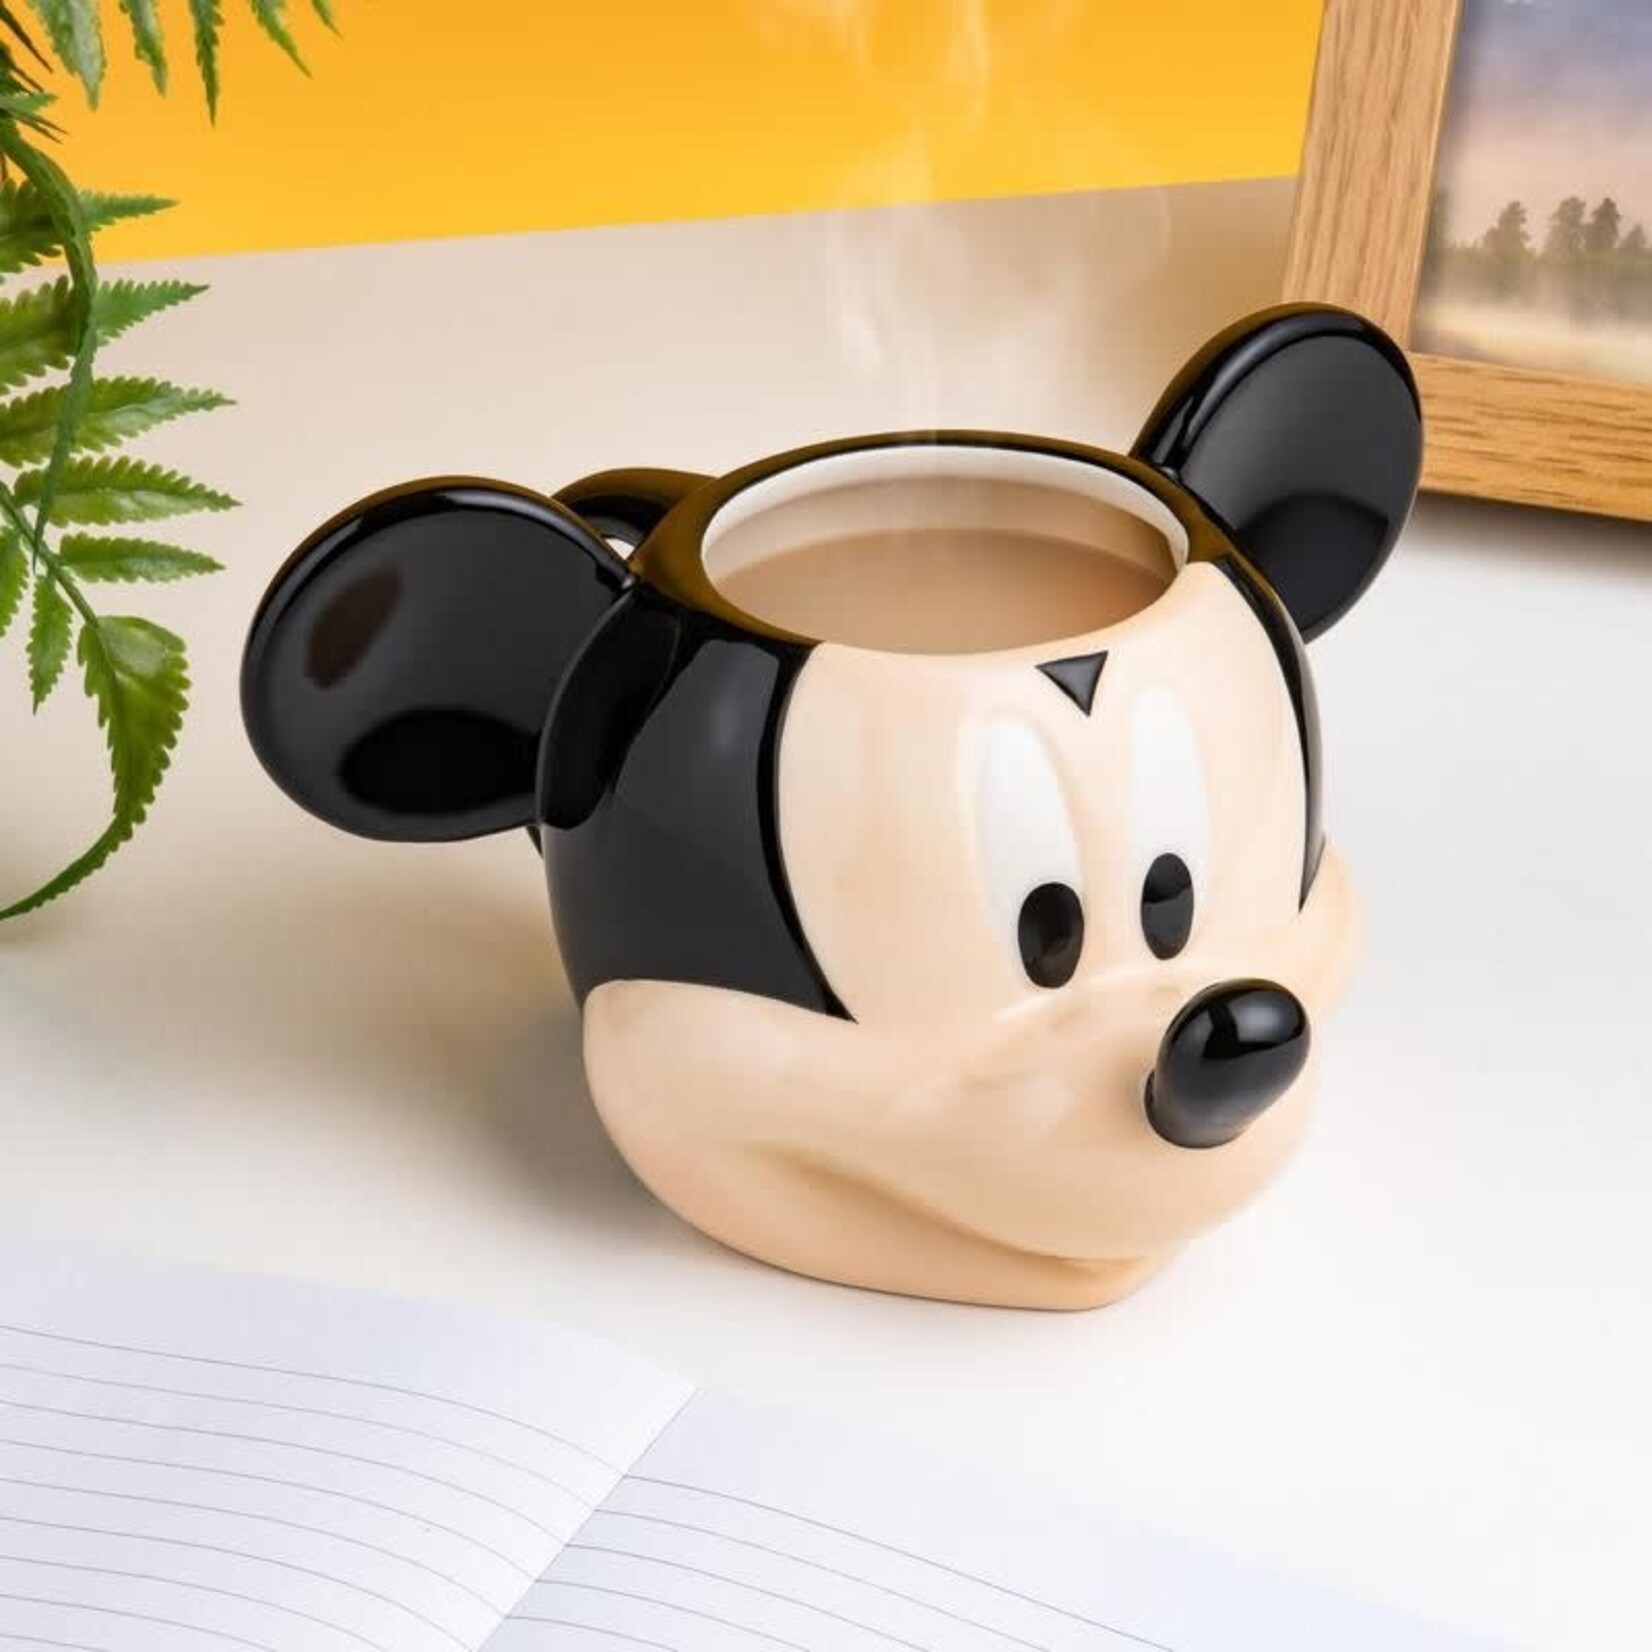 Disney Disney - Mickey Mouse Shaped Mug